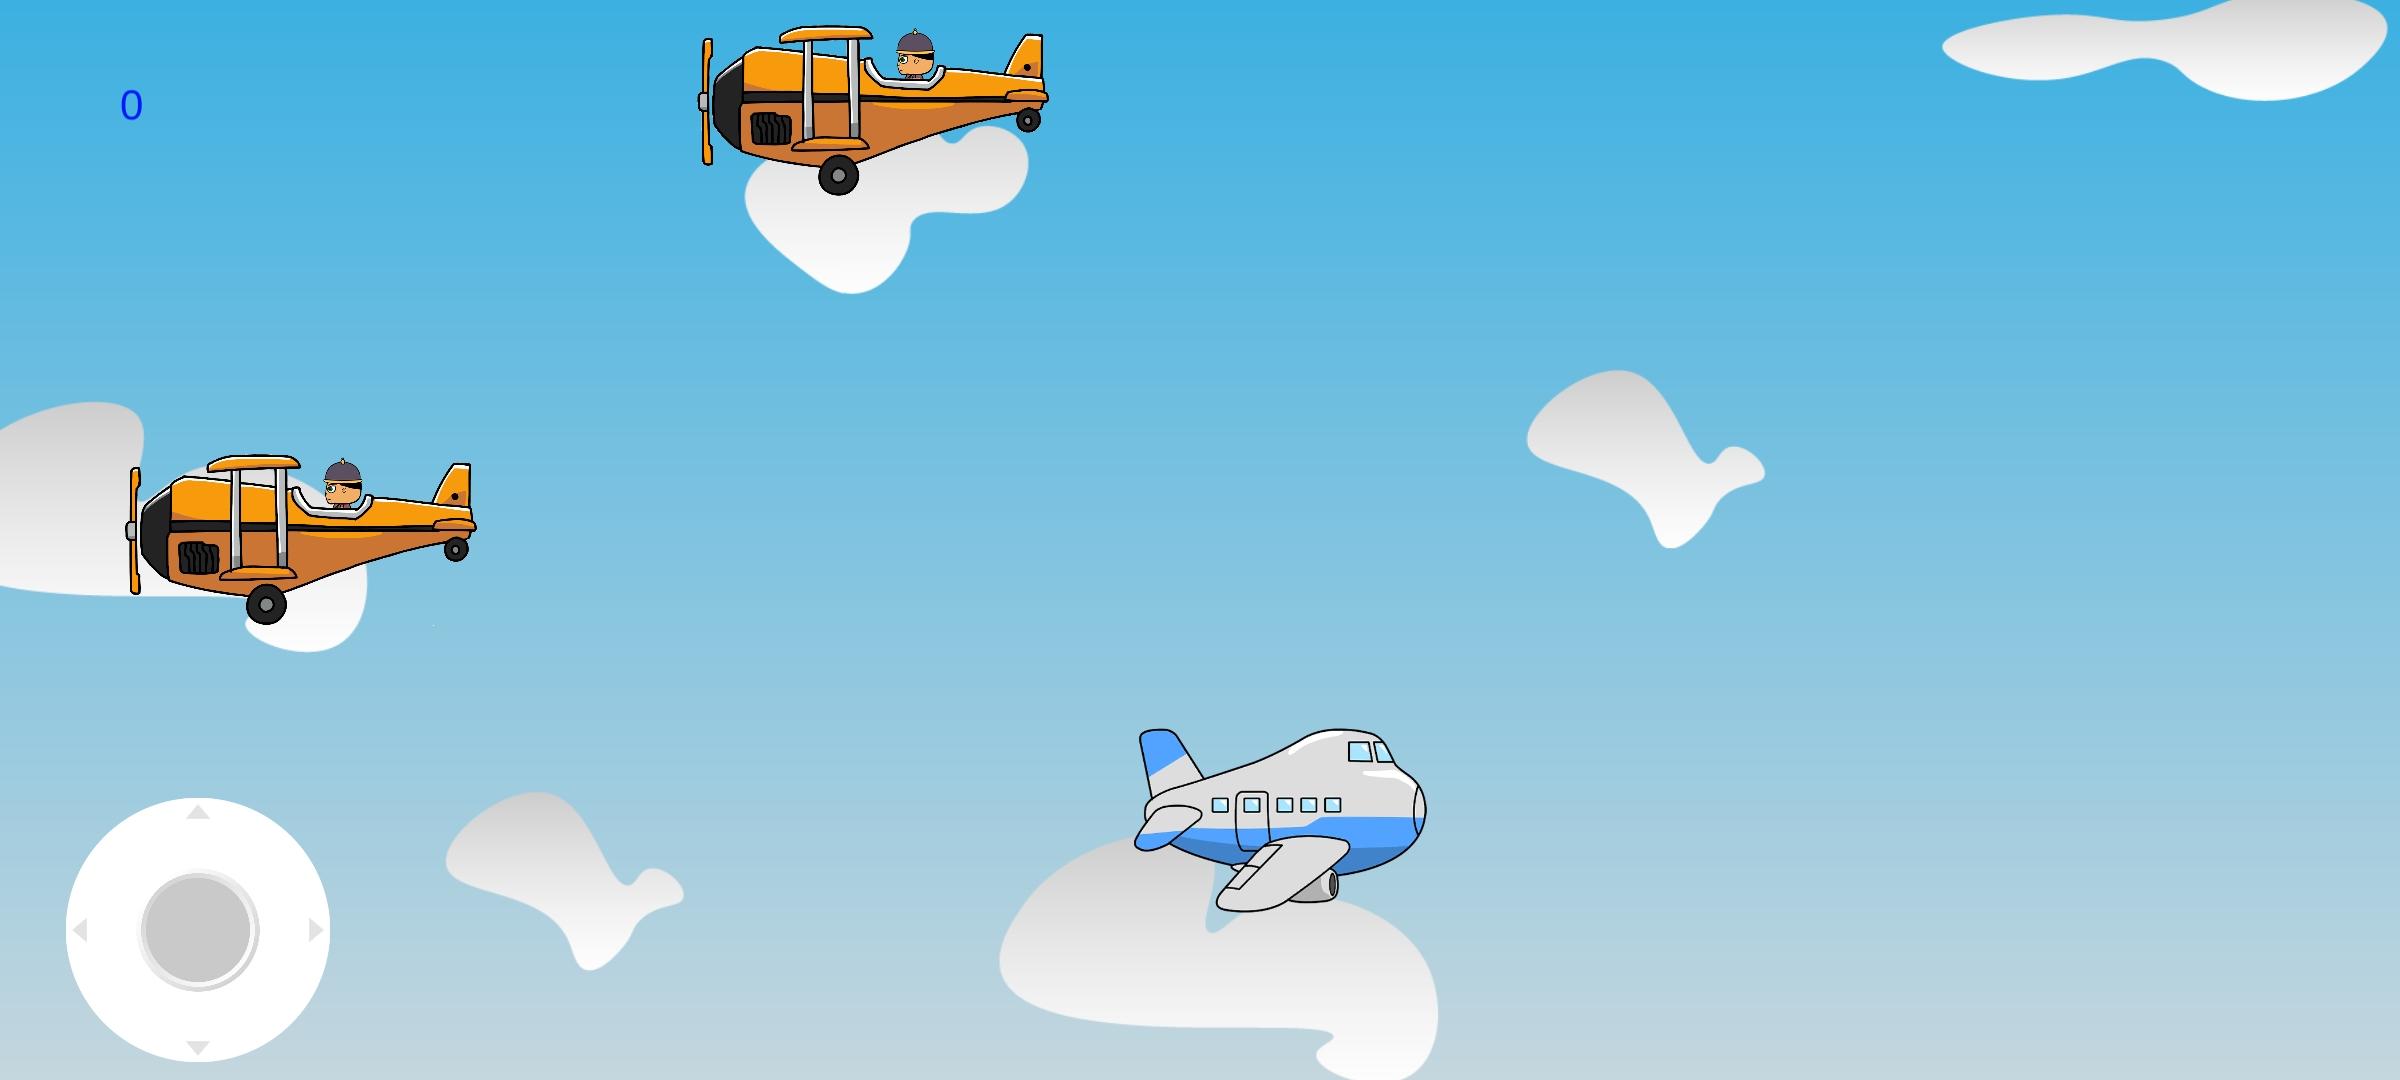 Screenshot 1 of Flugzeug - Flugsimulator 3.2